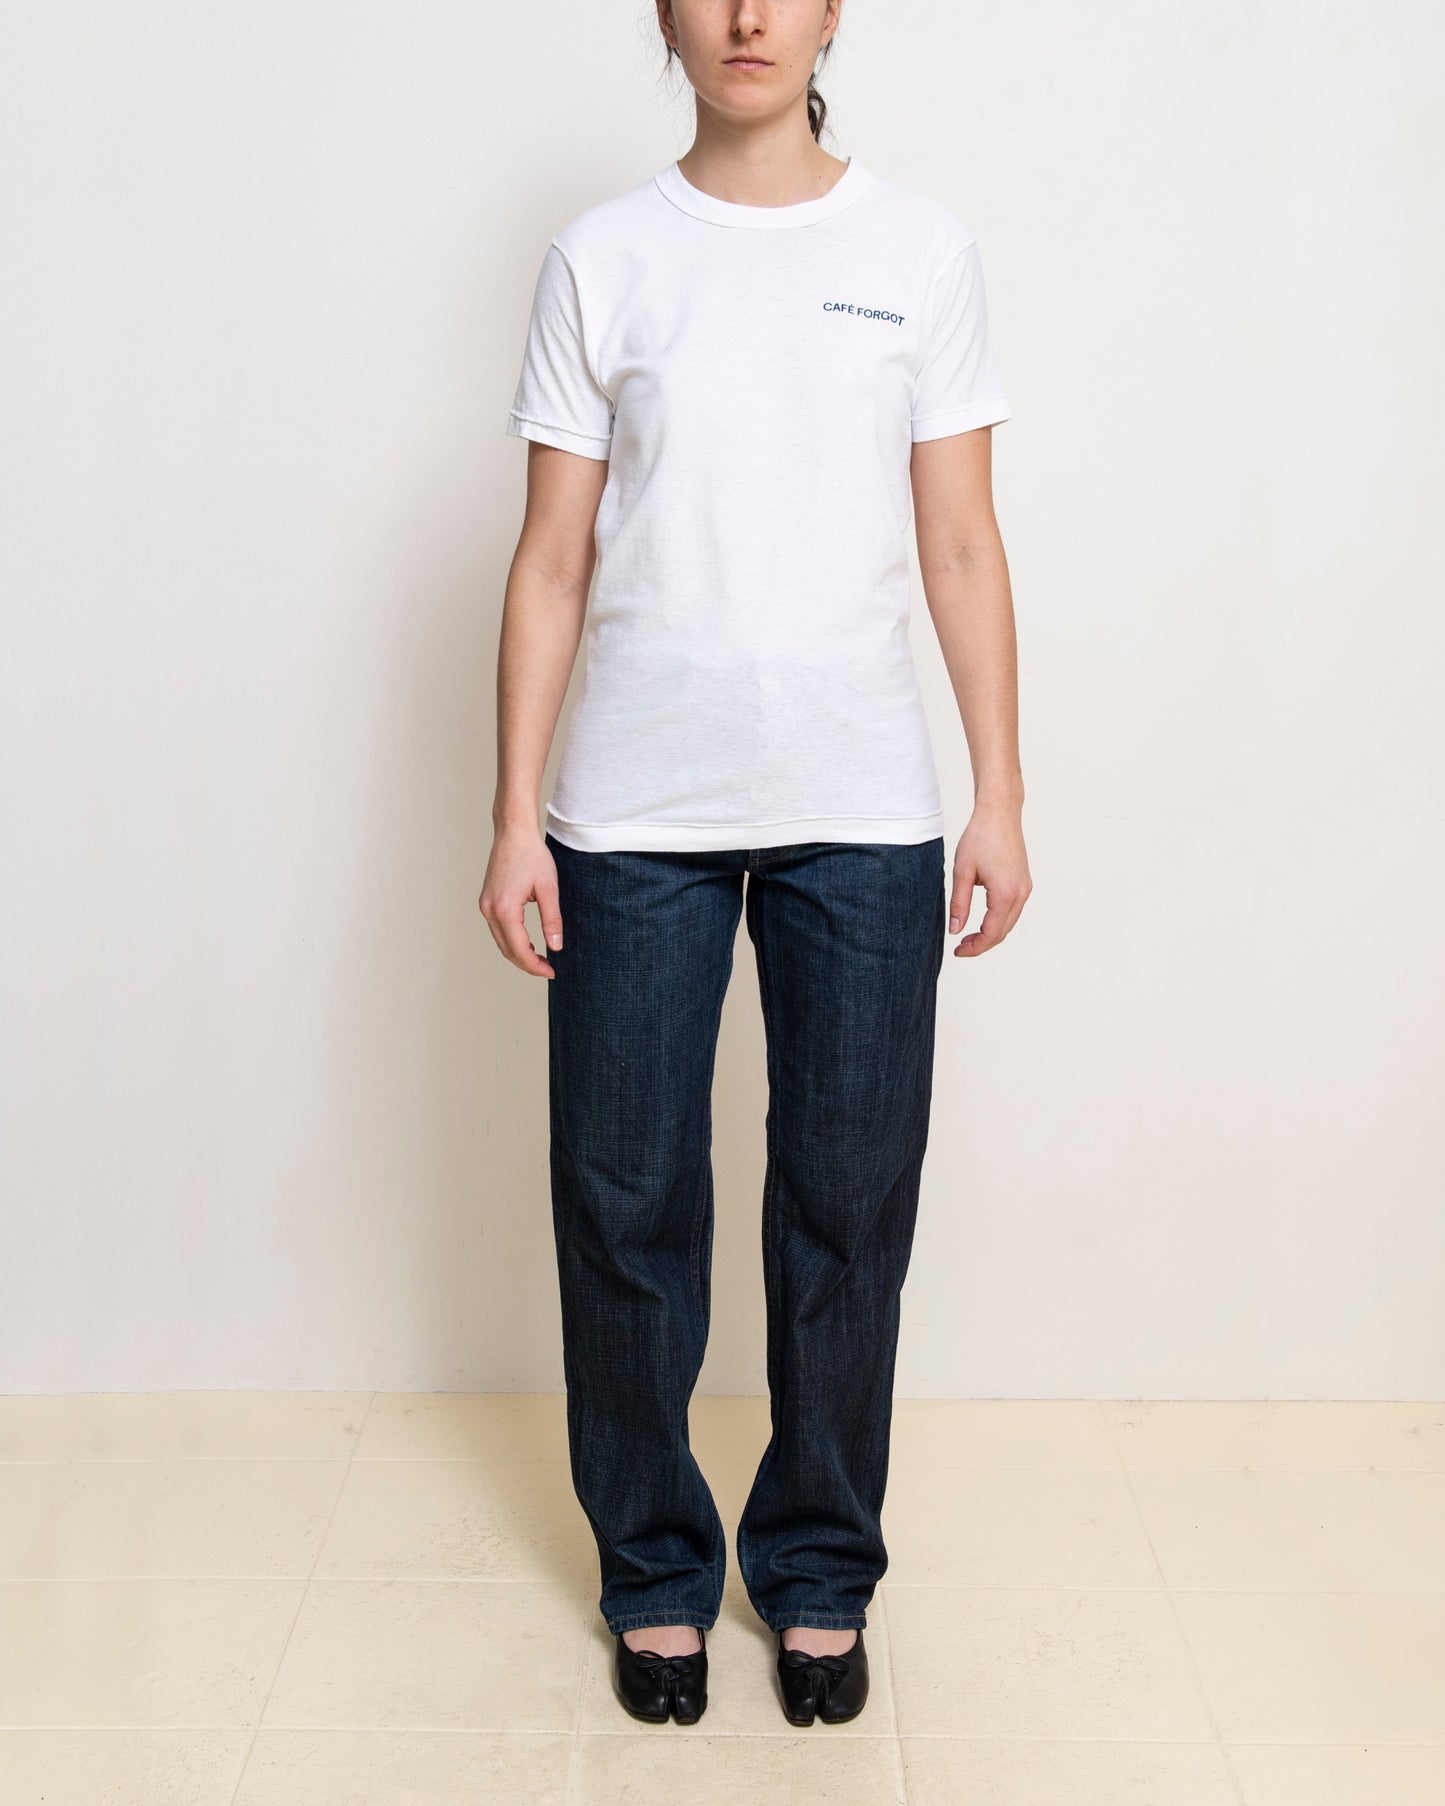 Café Forgot - White CF T-shirt with Navy Print